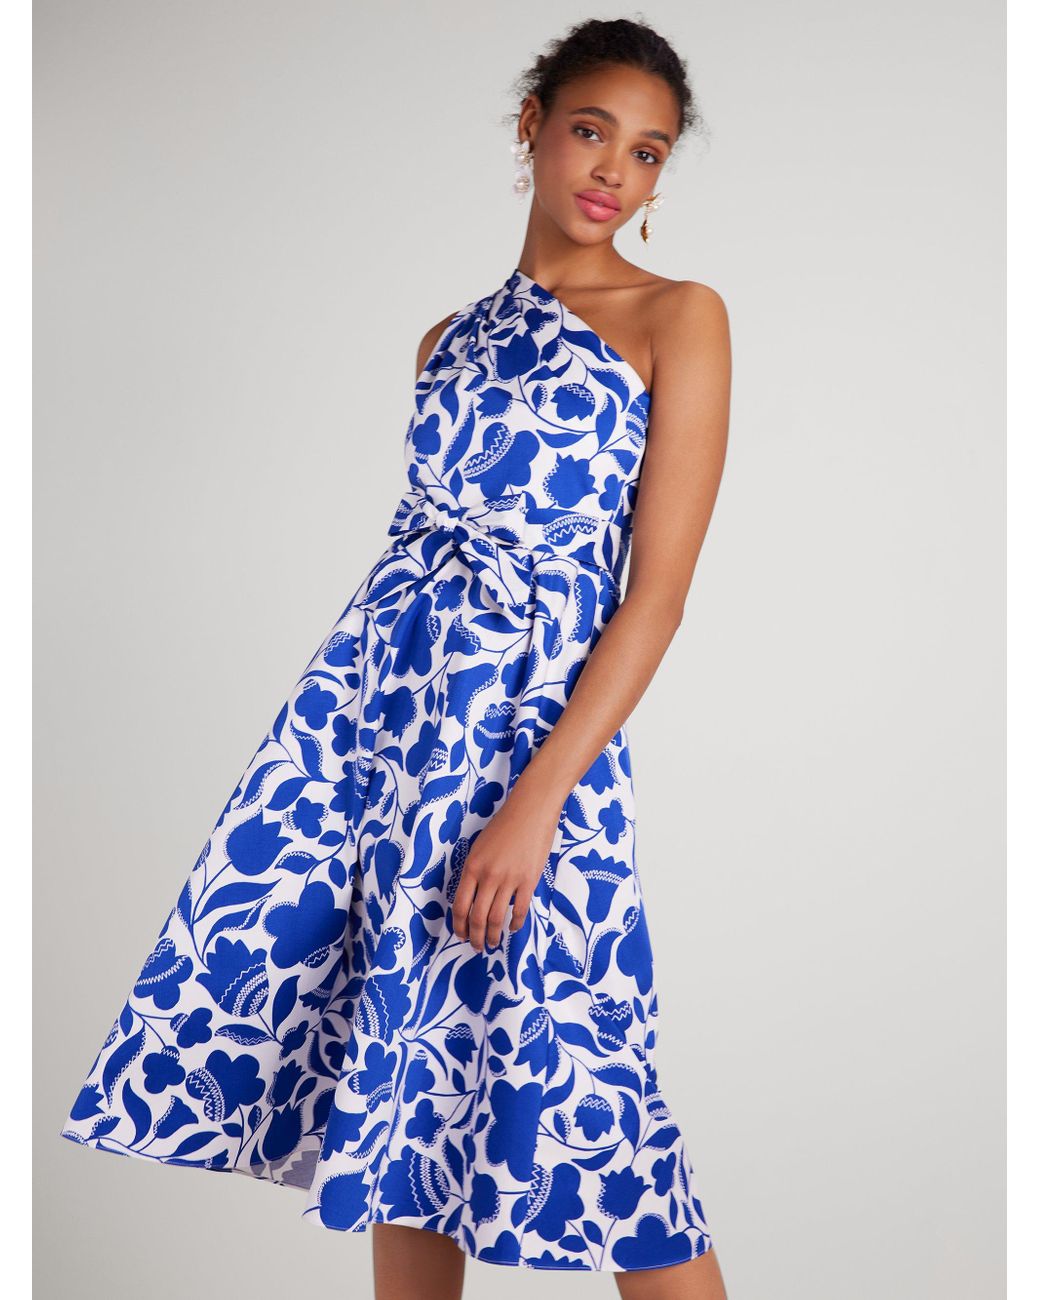 Kate Spade Zigzag Floral Belted Sabrina Dress in Blue | Lyst